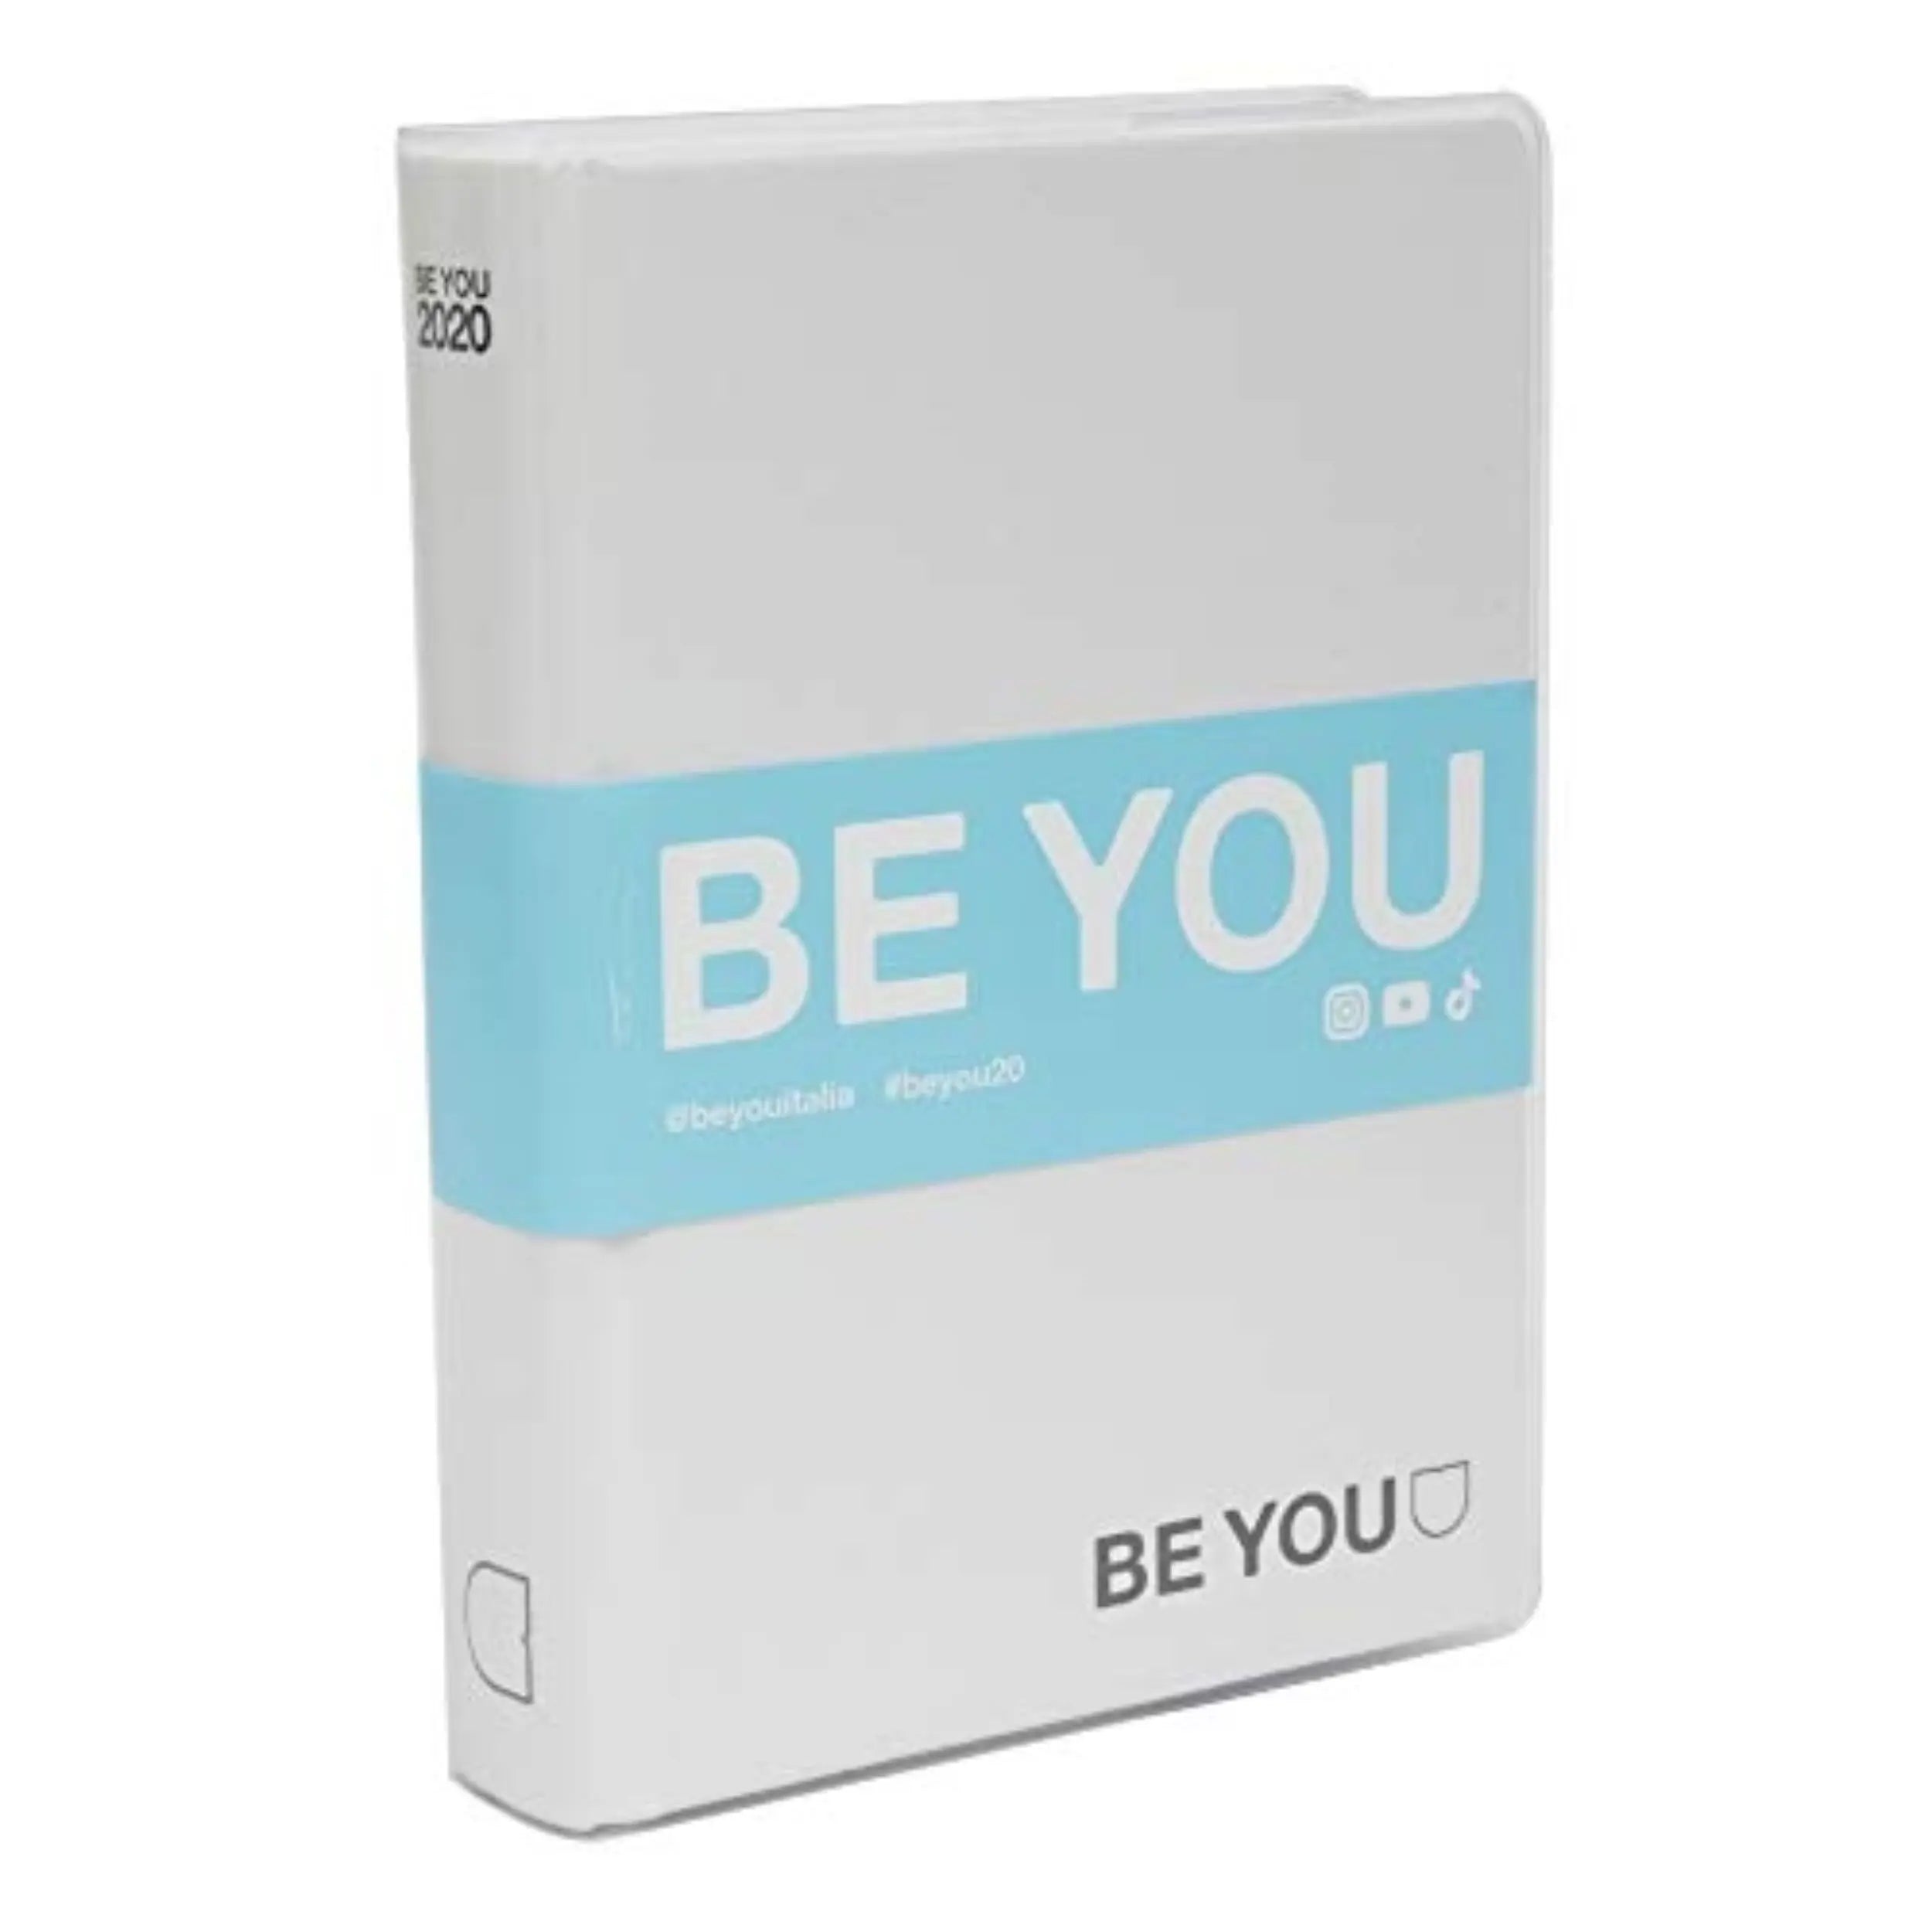 Giochi Preziosi - BE YOU Diary Original Easy 866/BE9D60